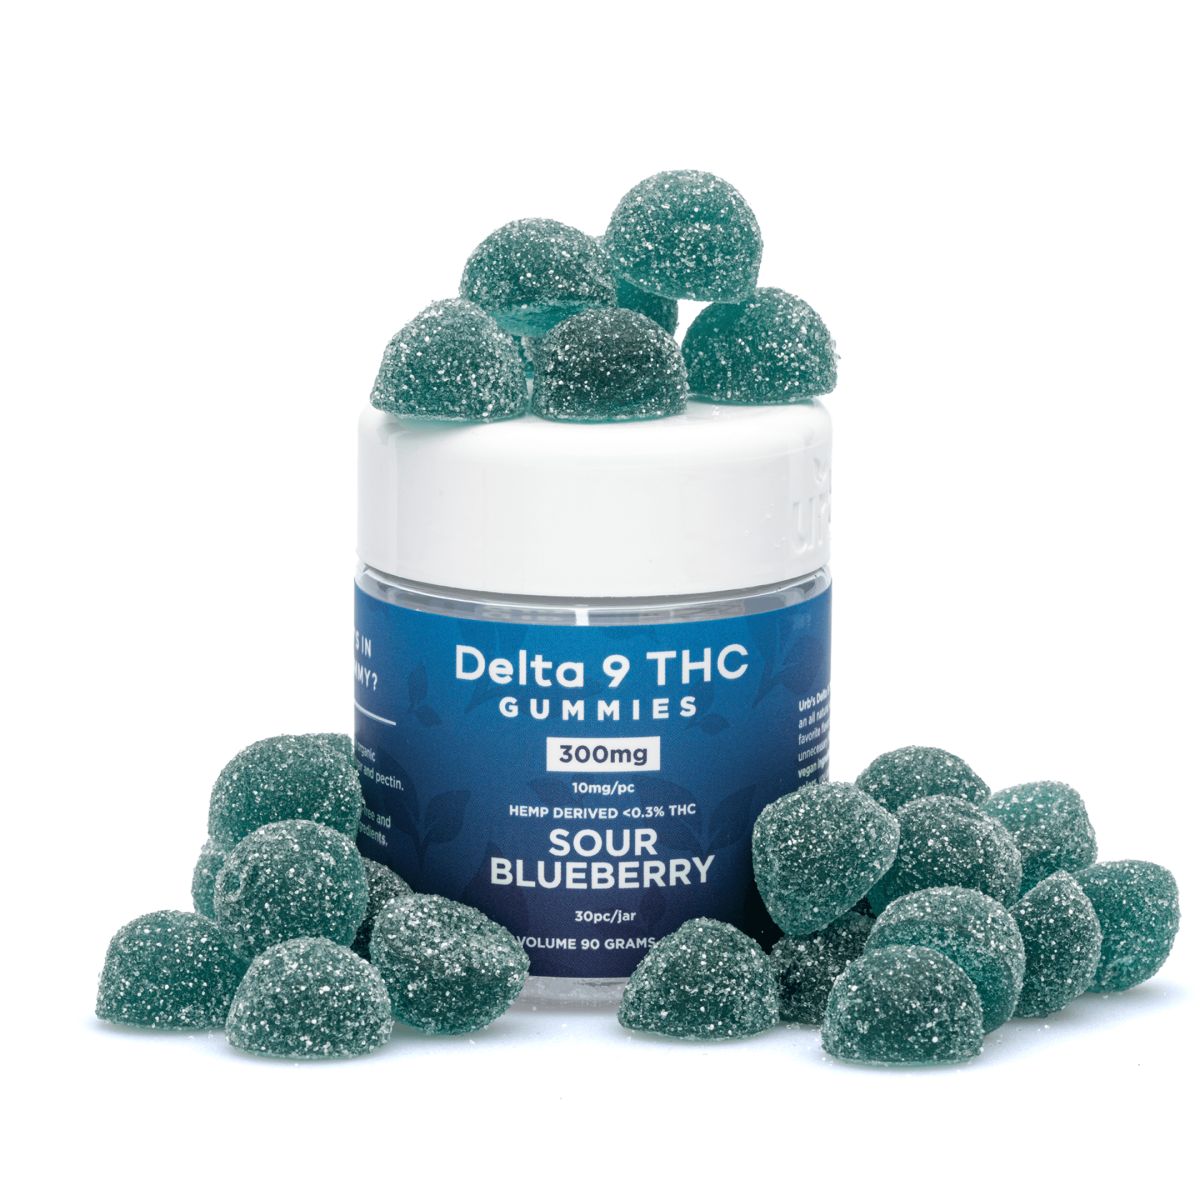 Delta-9-THC Gummies – Sour Blueberry (300 mg Total Delta-9-THC)